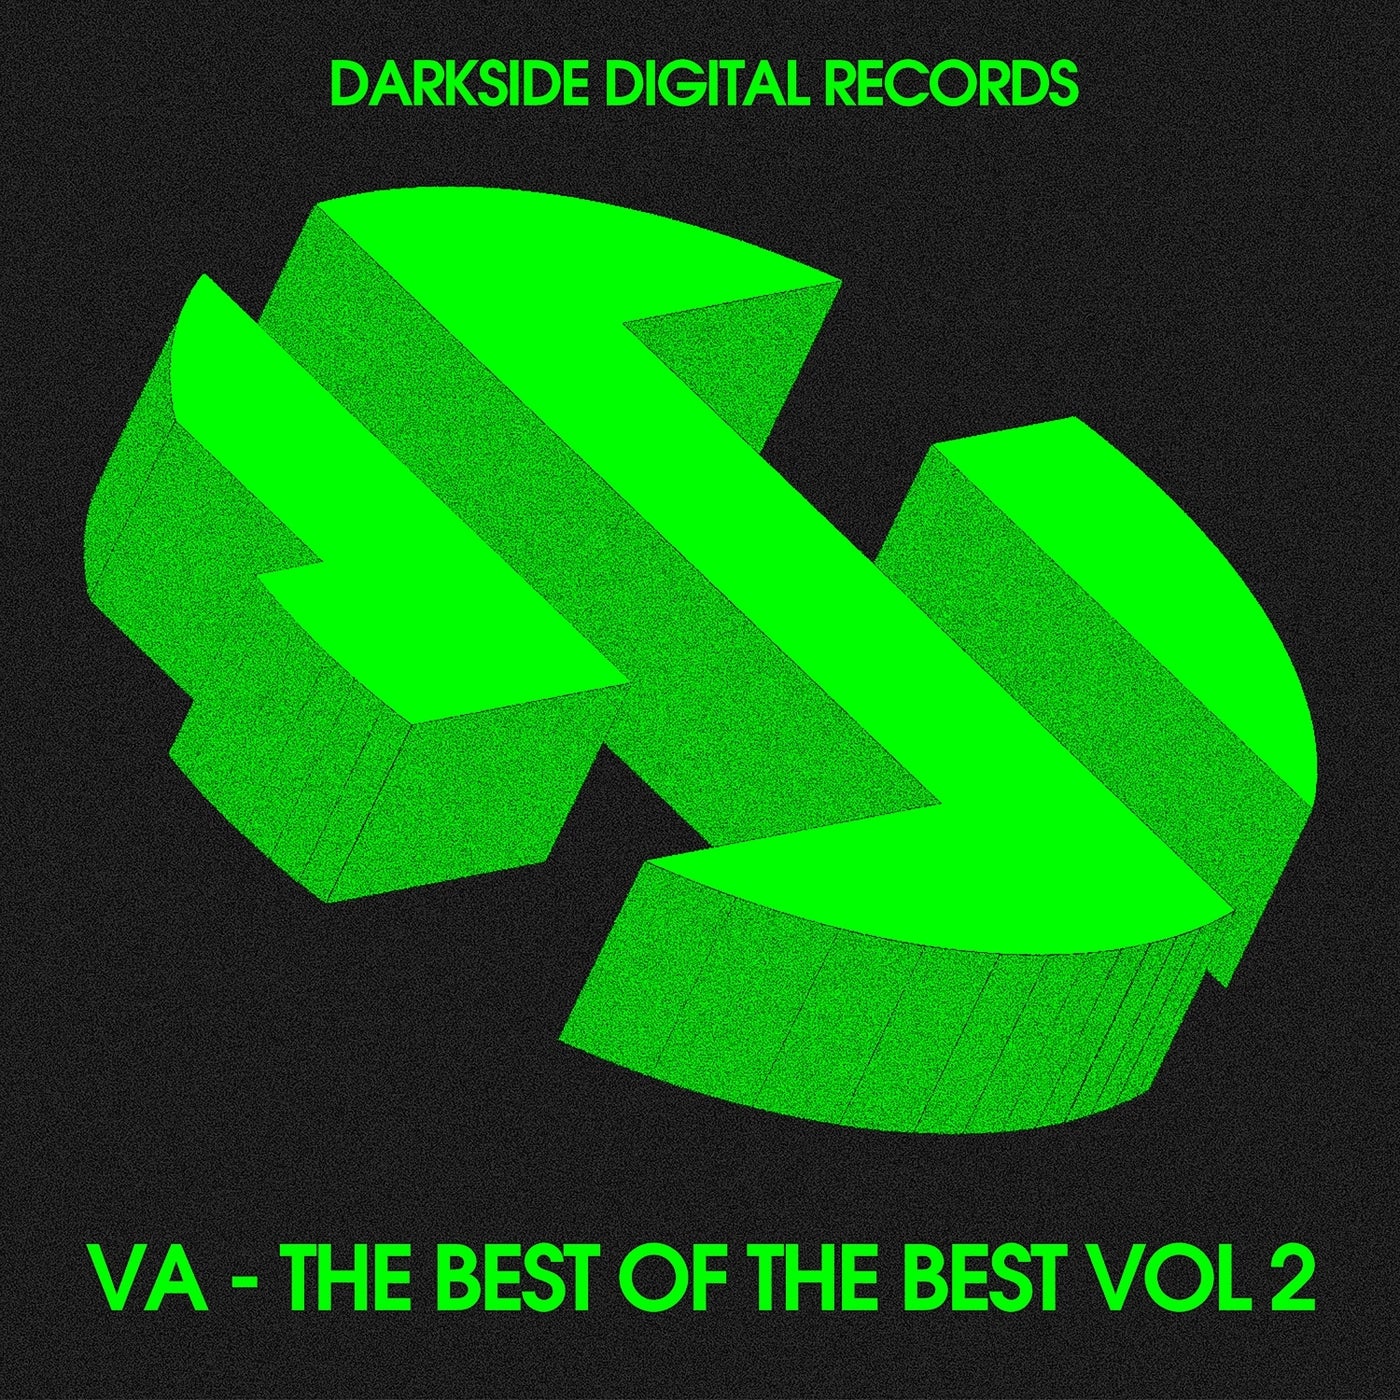 VA - The Best of the Best, Vol. 2